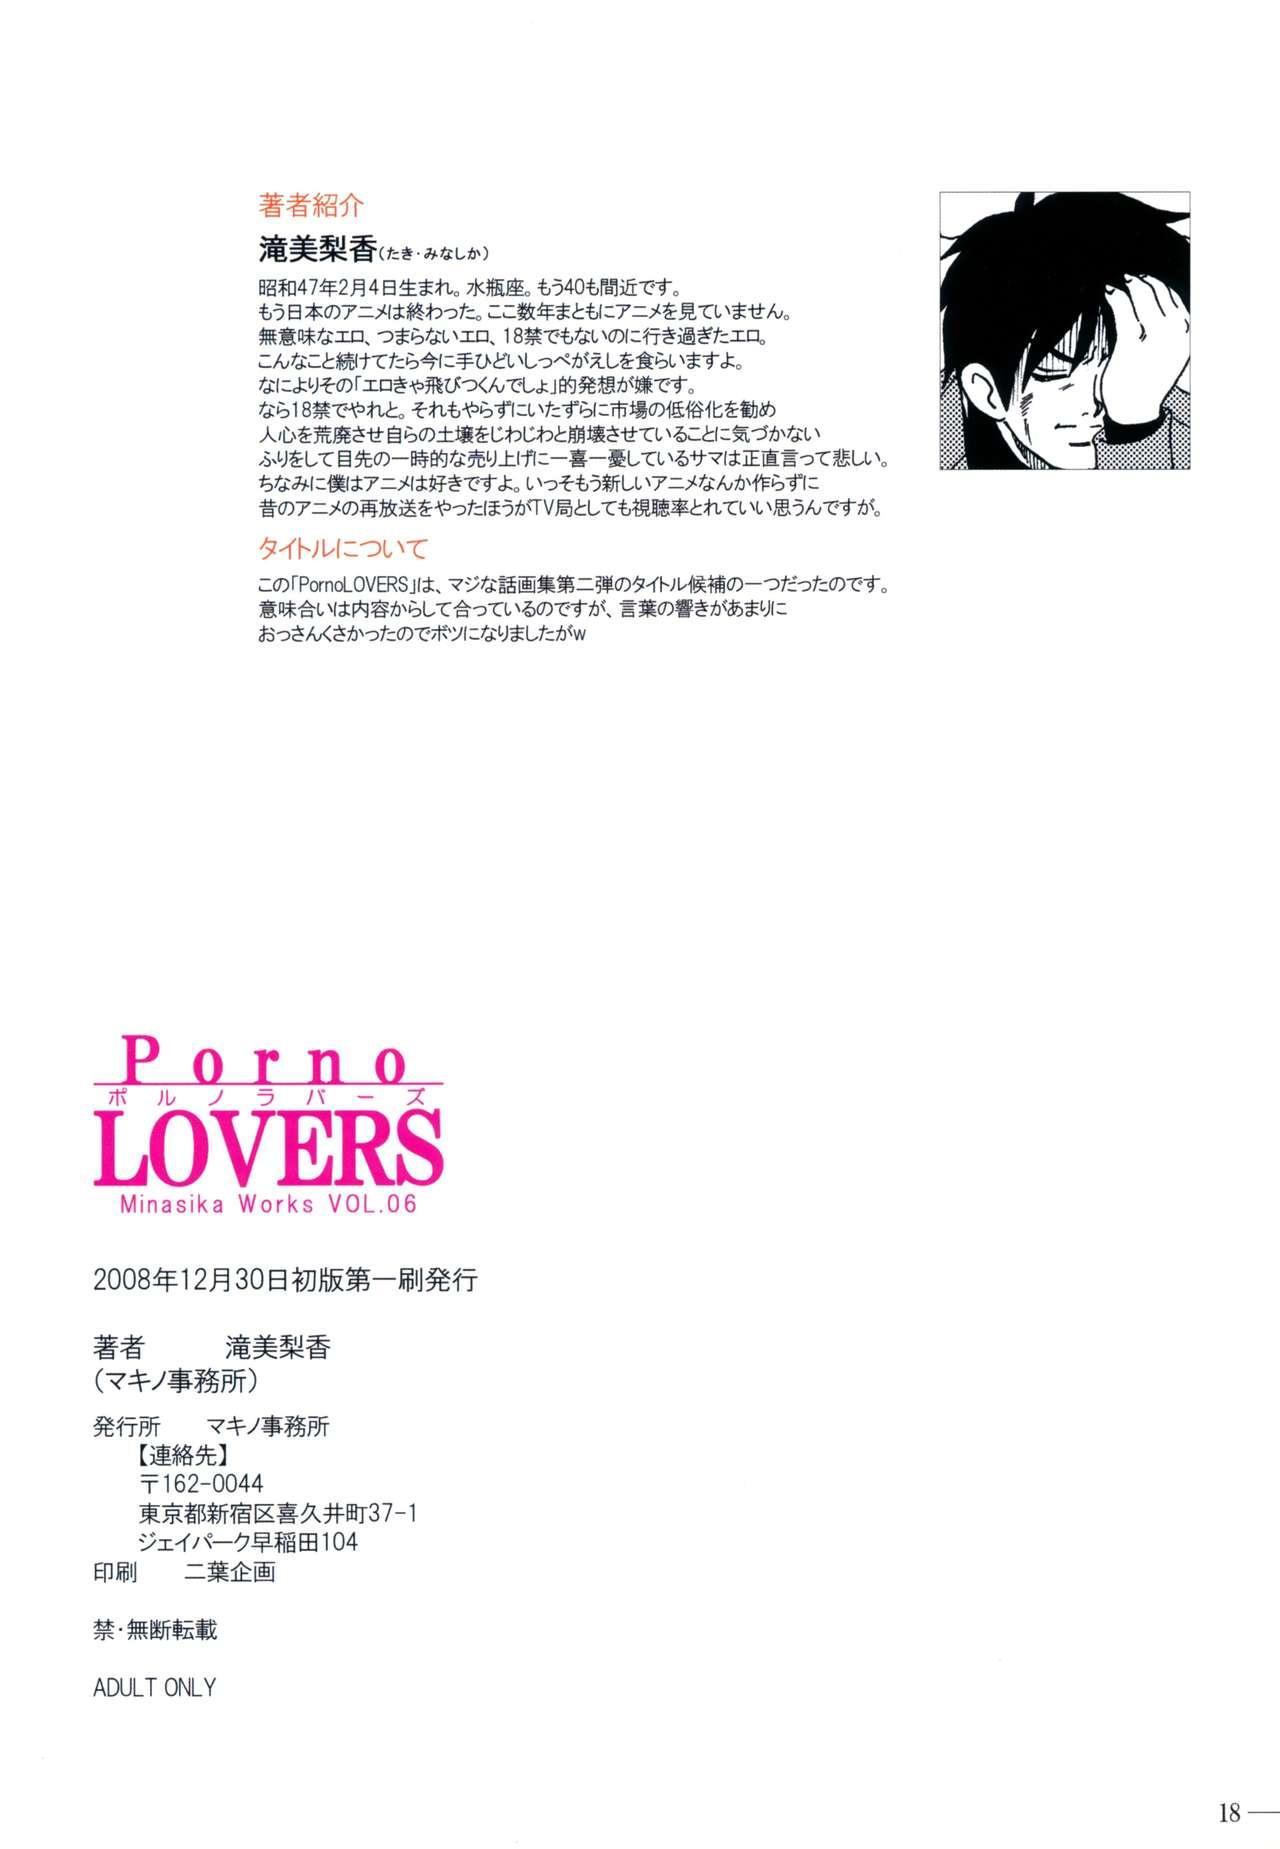 Porno Lovers - Minashika Works Vol. 06 16